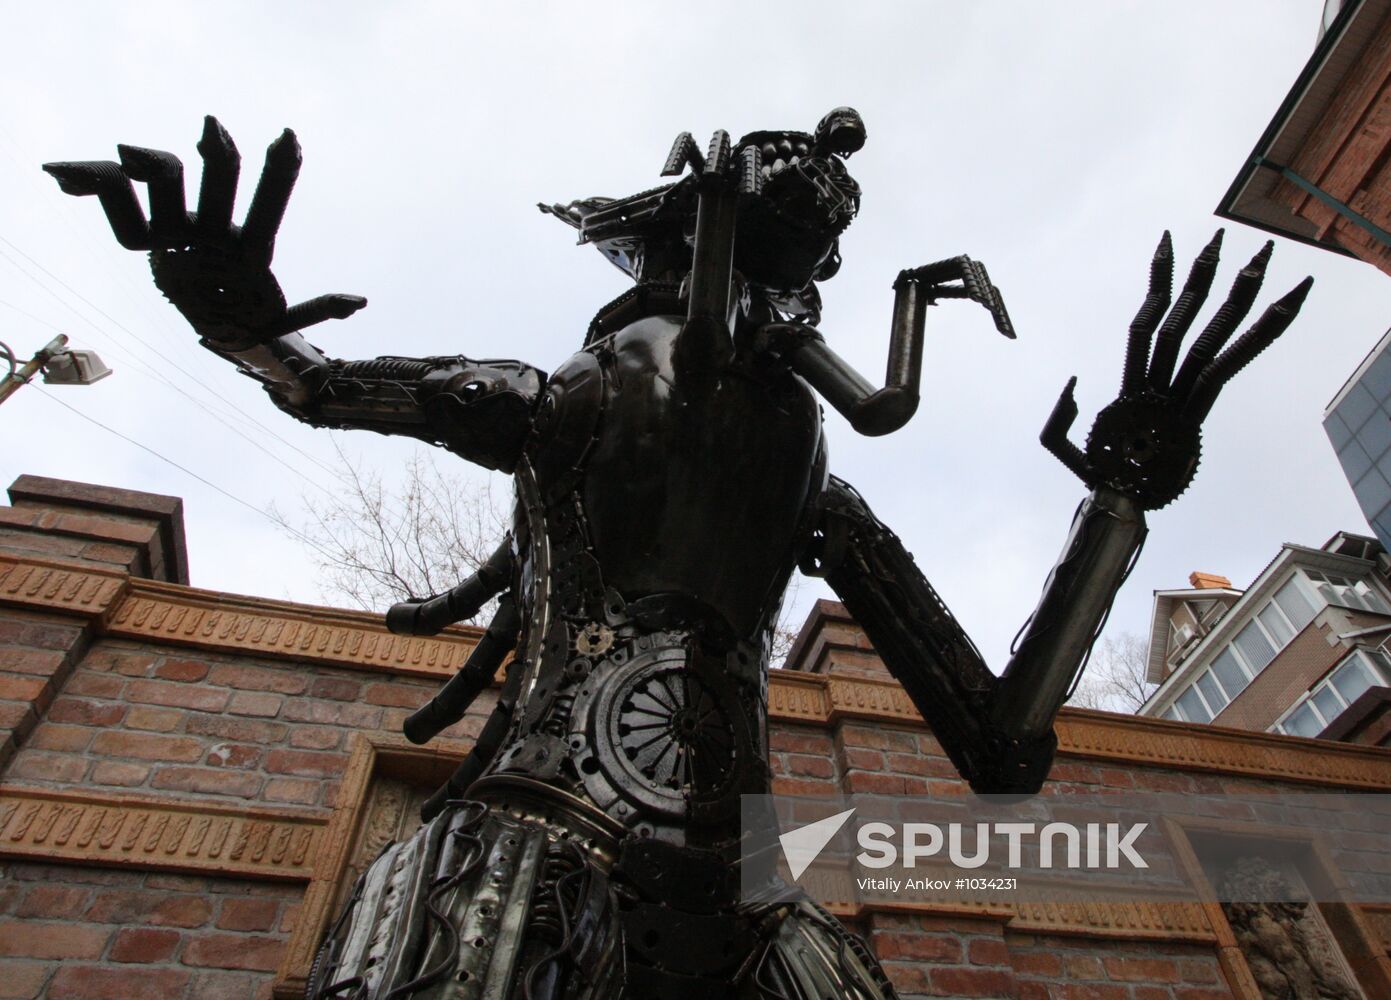 Alien statue unveiled in center of Vladivostok